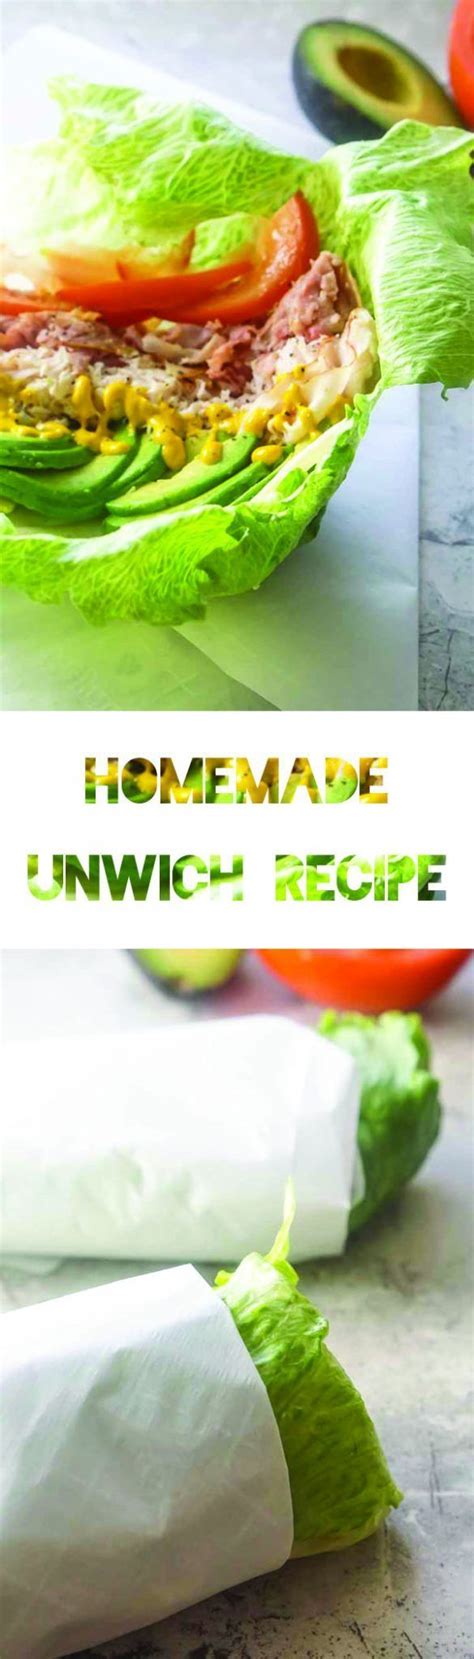 Homemade Unwich Recipe Keto Diet Low Carb Lettuce Wrap Jimmy